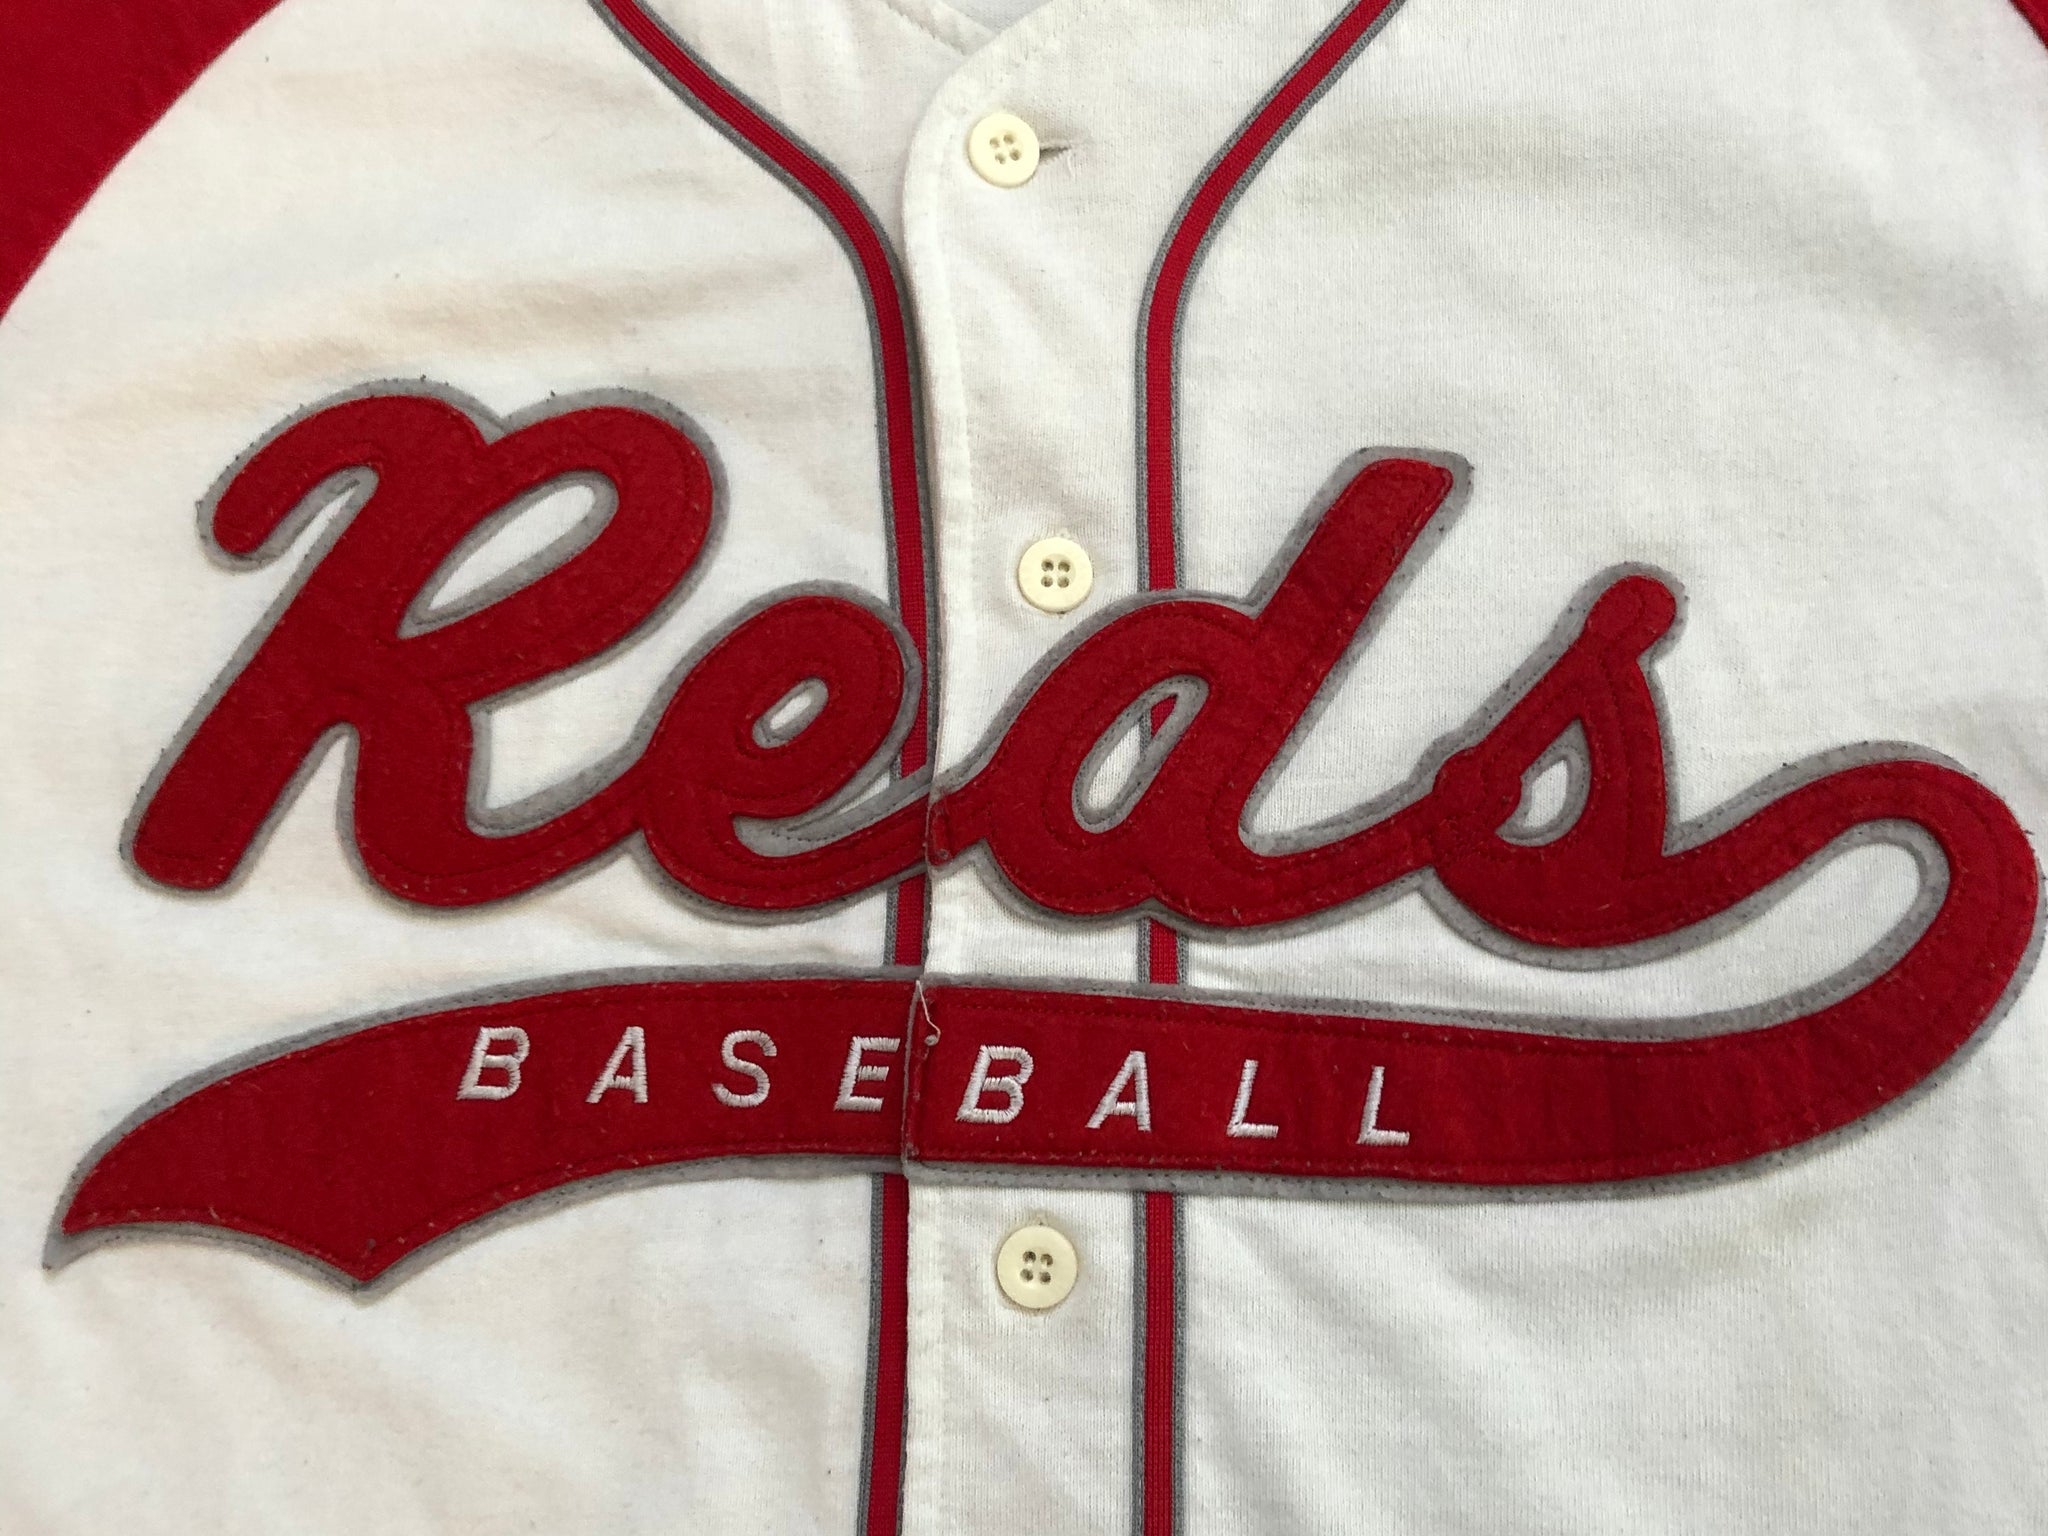 vintage reds jersey